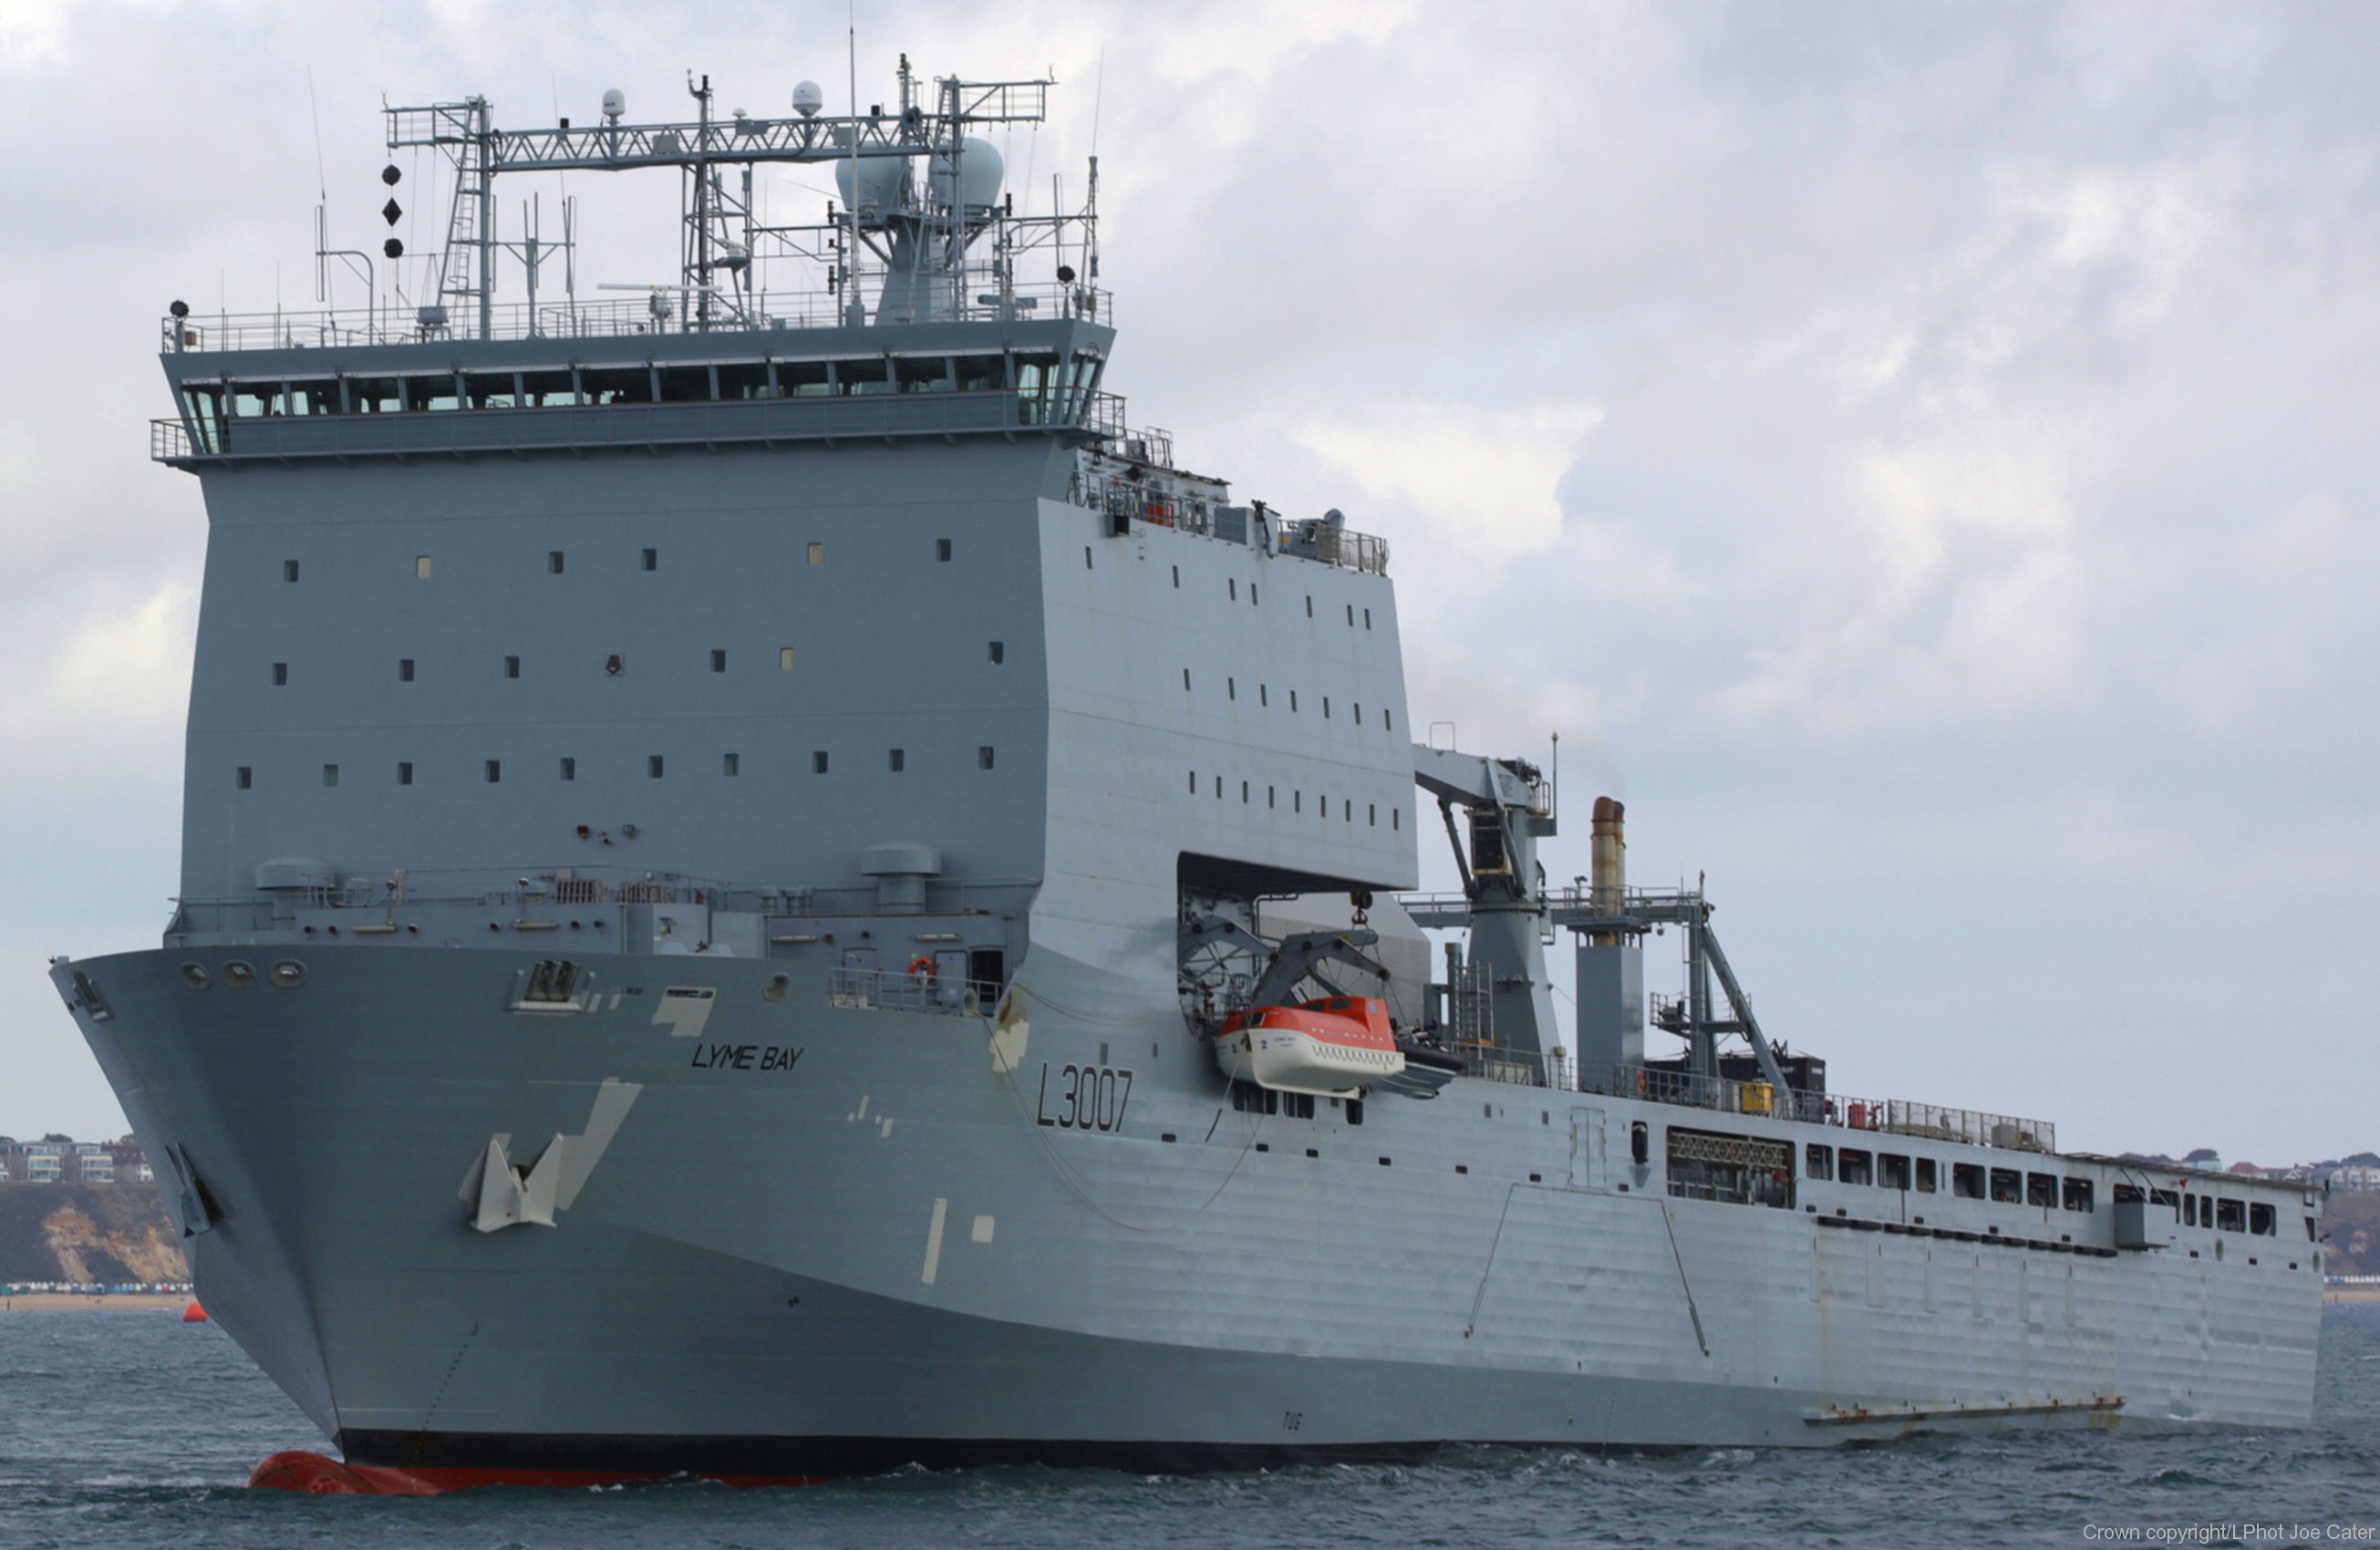 l-3007 rfa lyme bay dock landing ship royal fleet auxilary navy 24